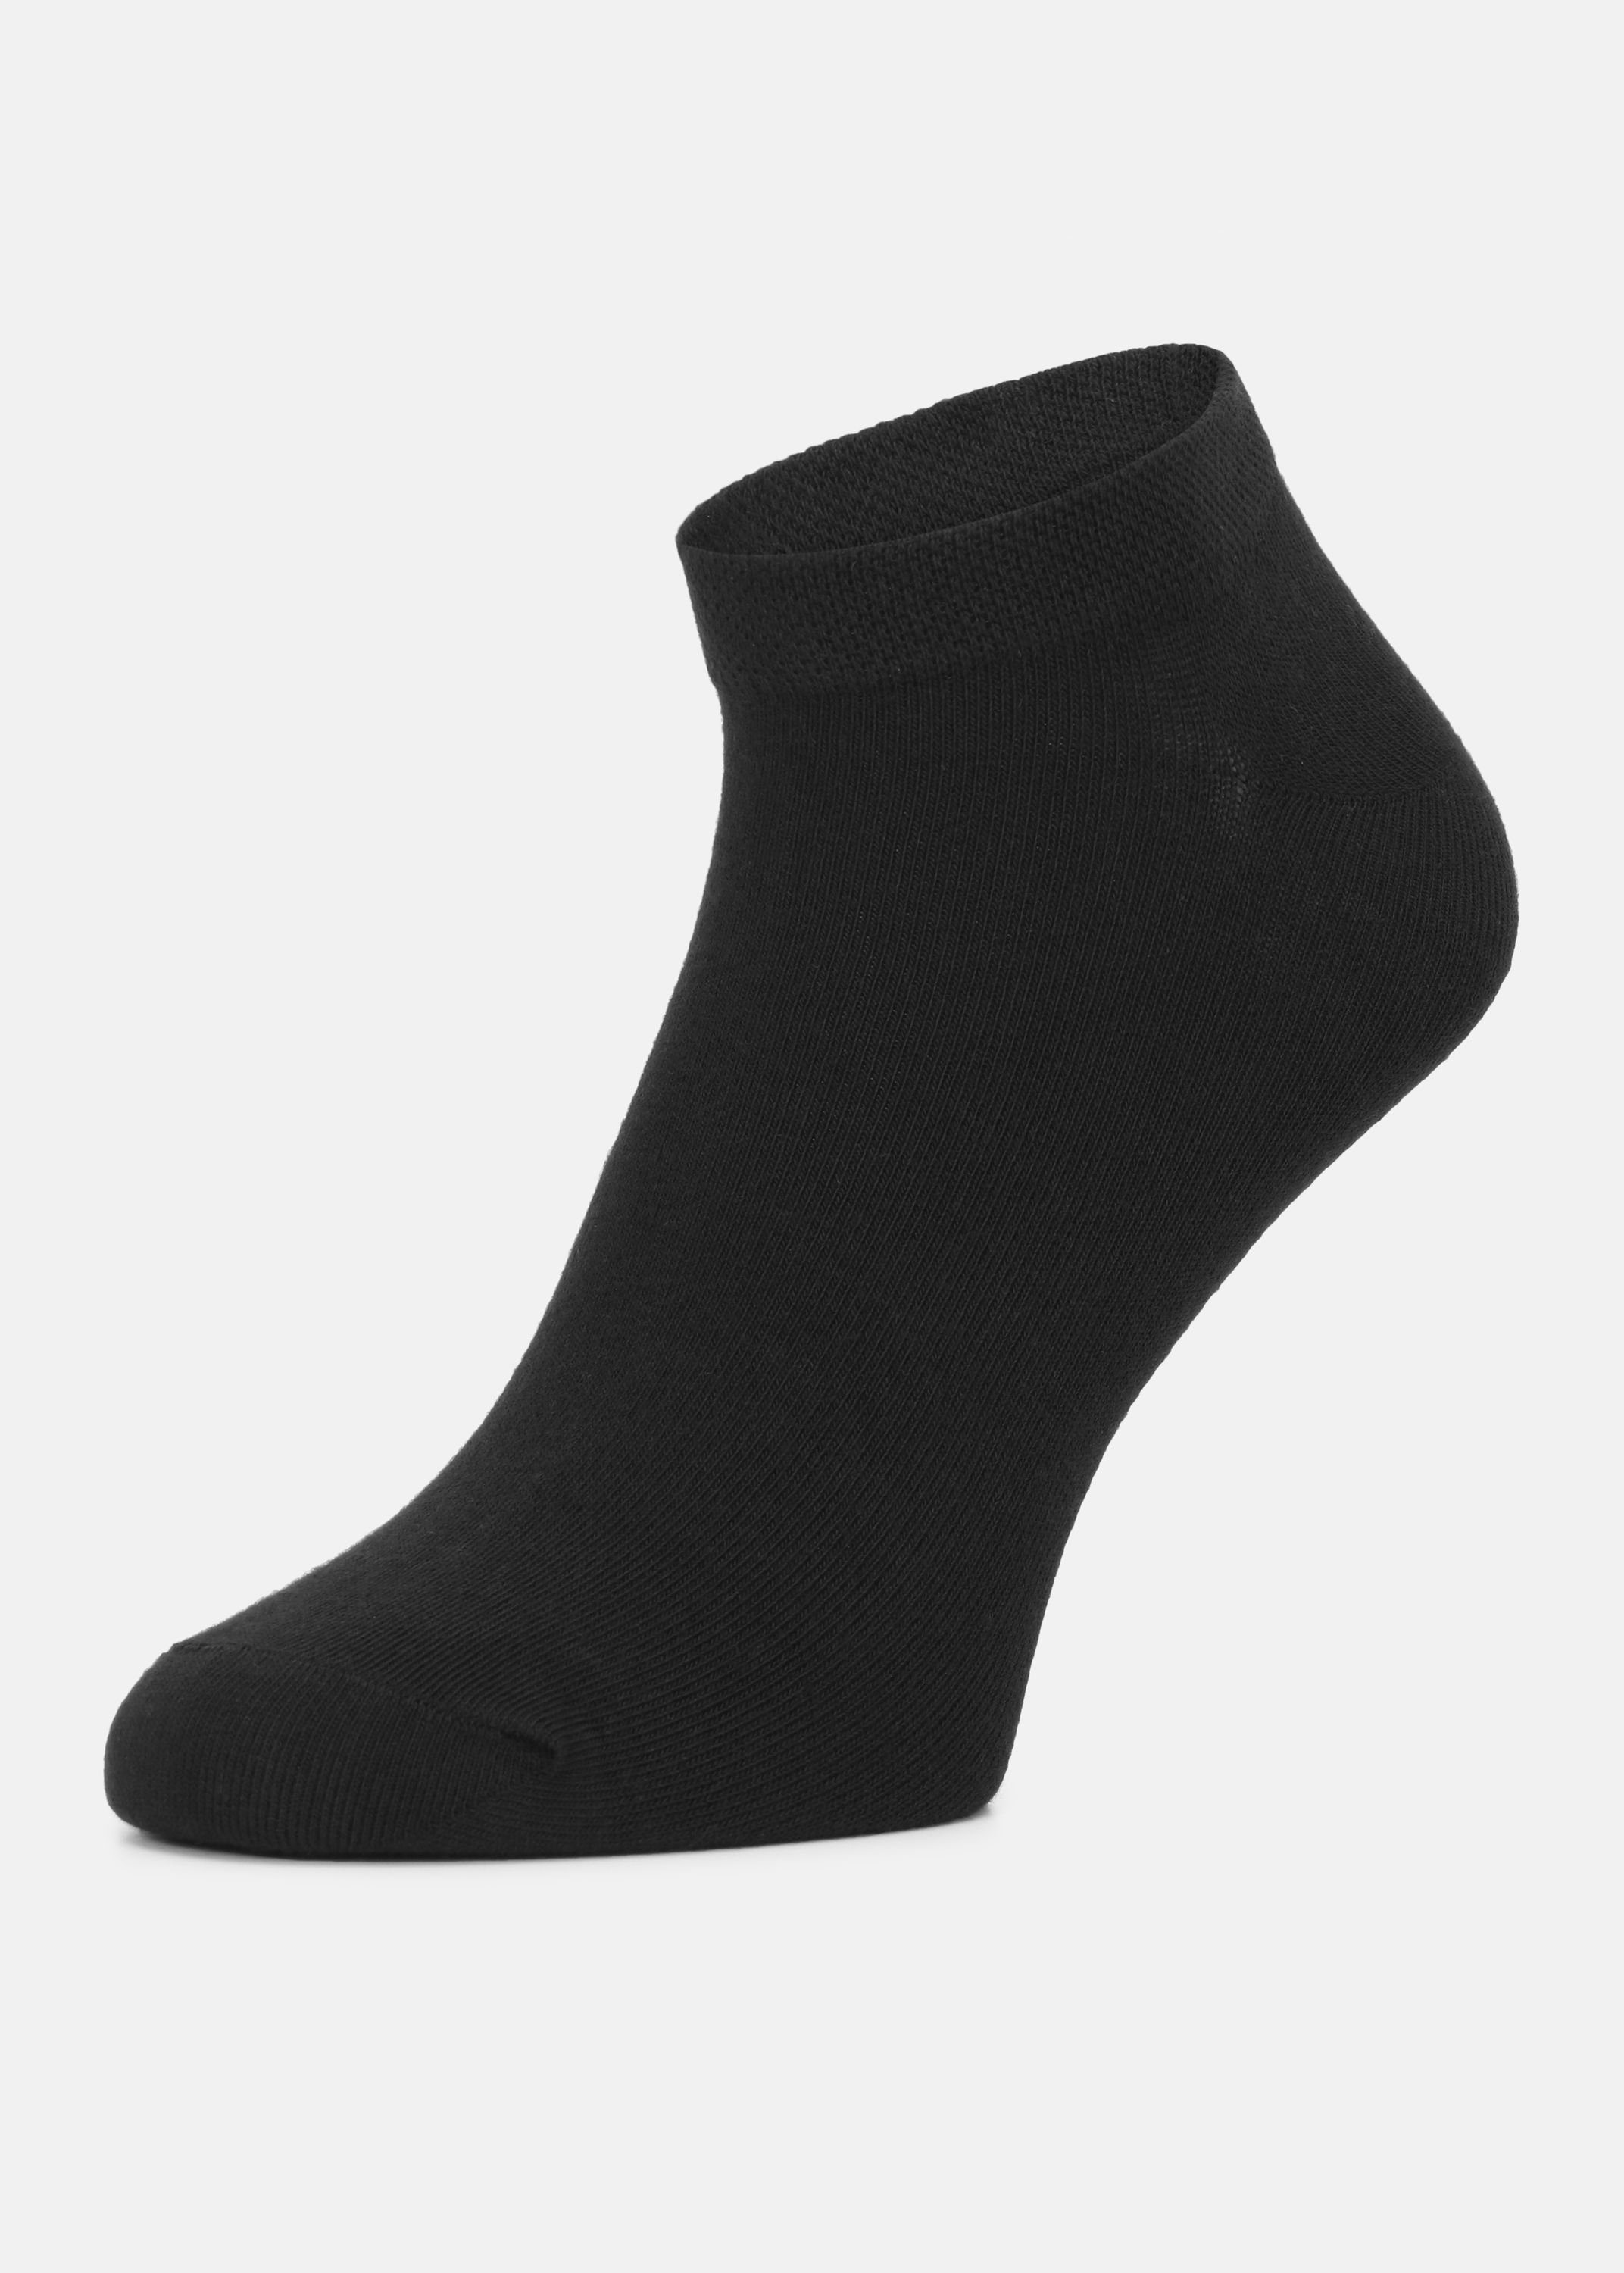 10er Sneaker AT004 Schwarz Herren und Ladeheid (5 Damen 5er Pack Pack) Socken Socken